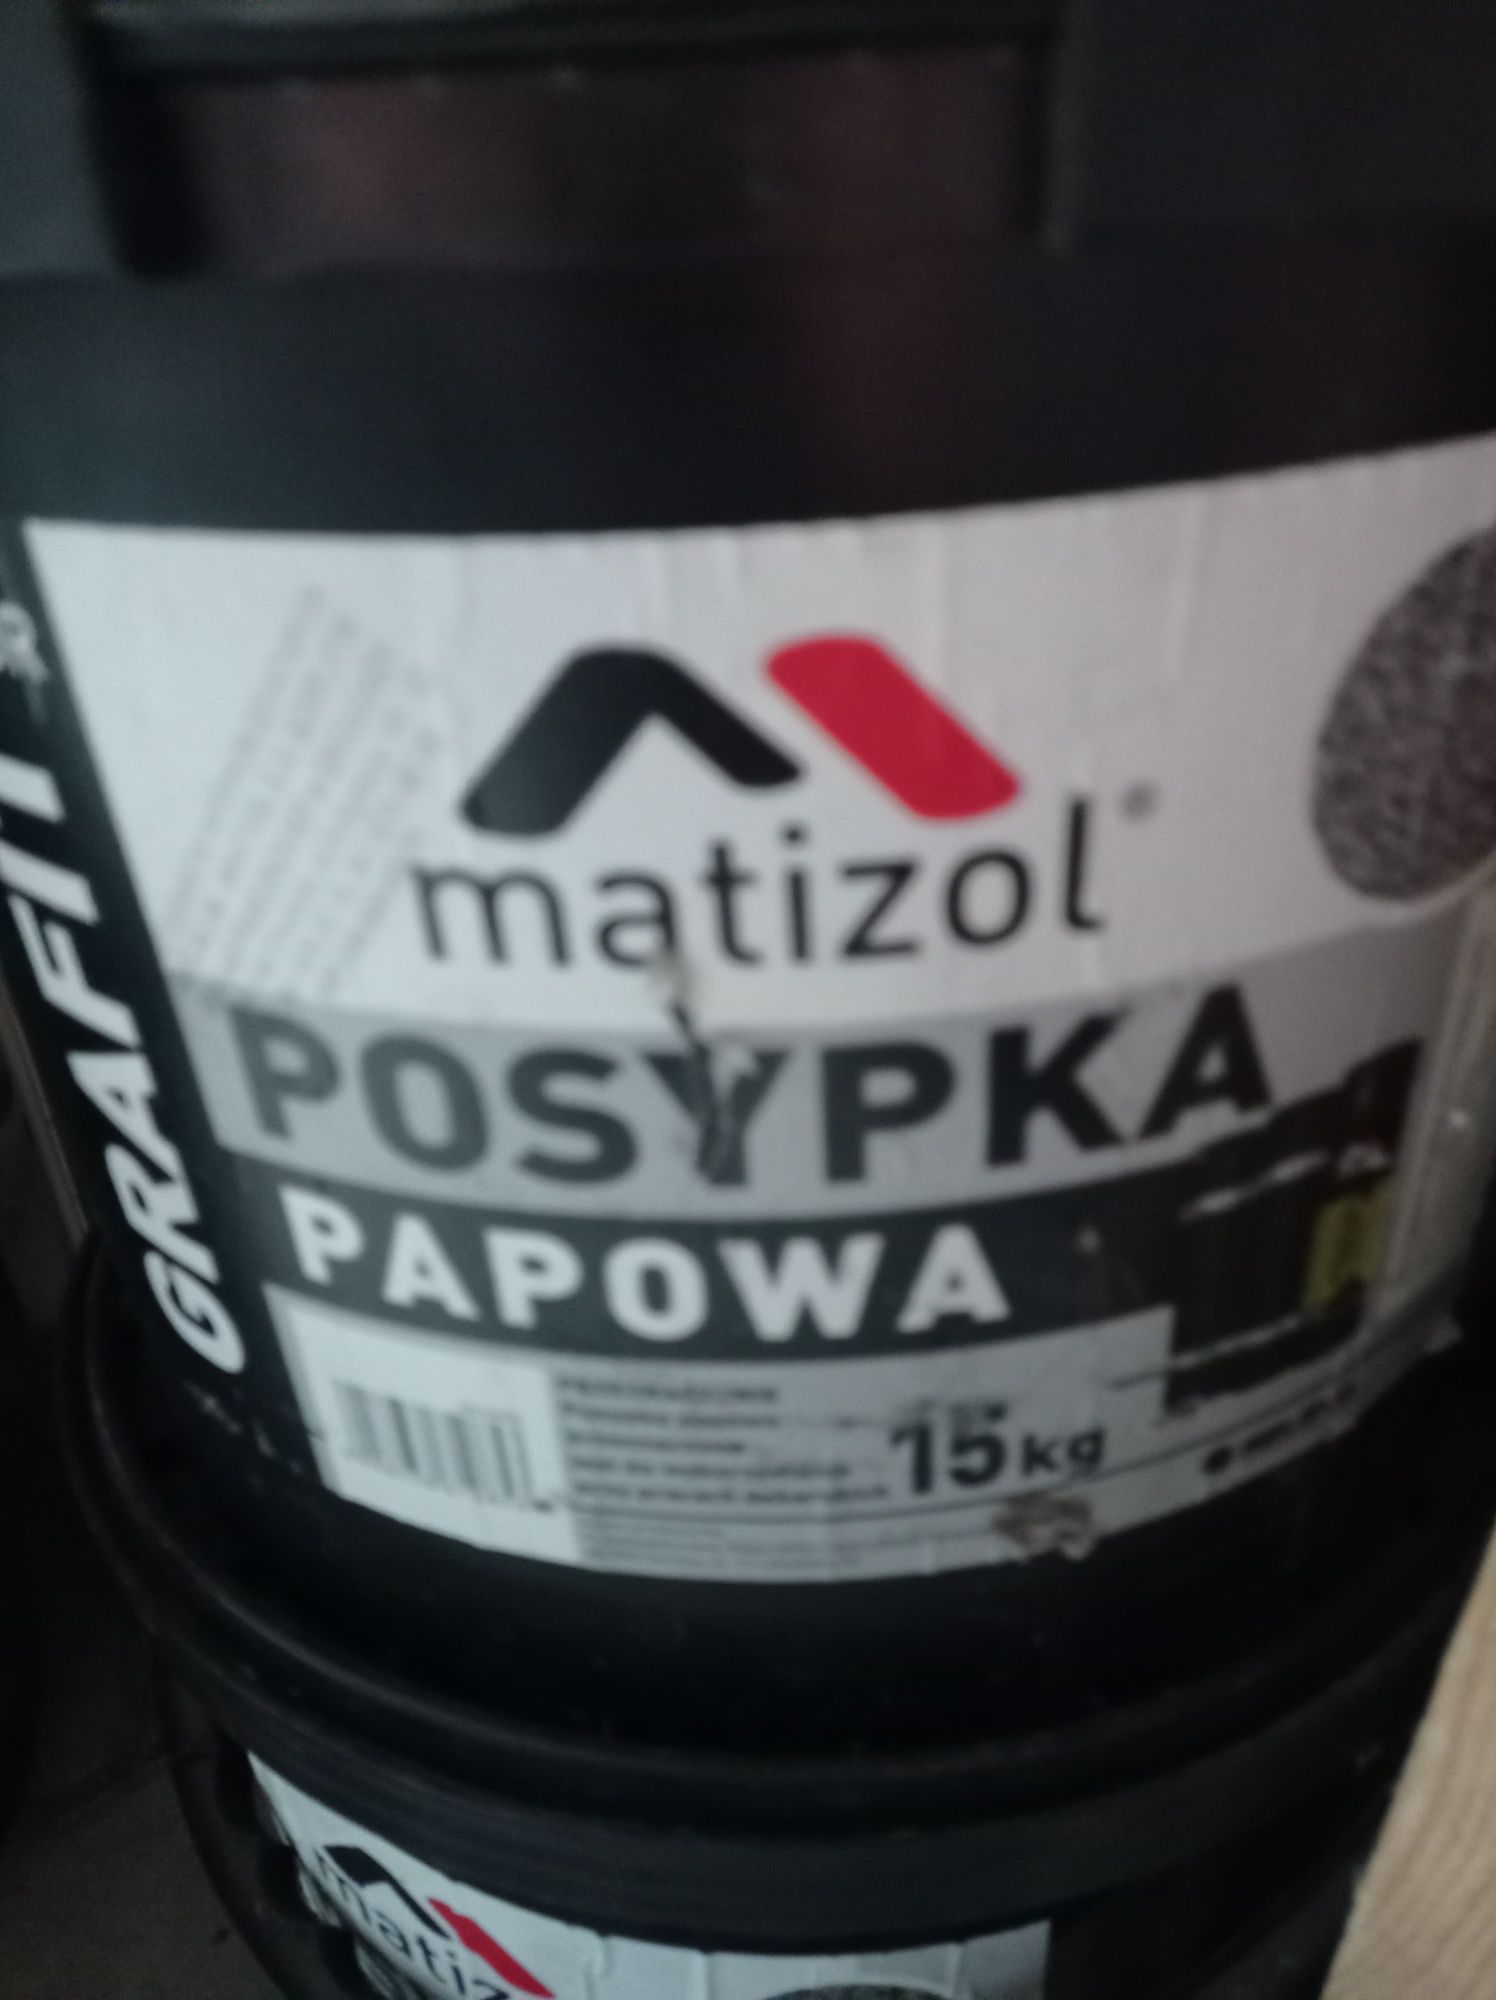 Posypką papowa Matizol 15 kg